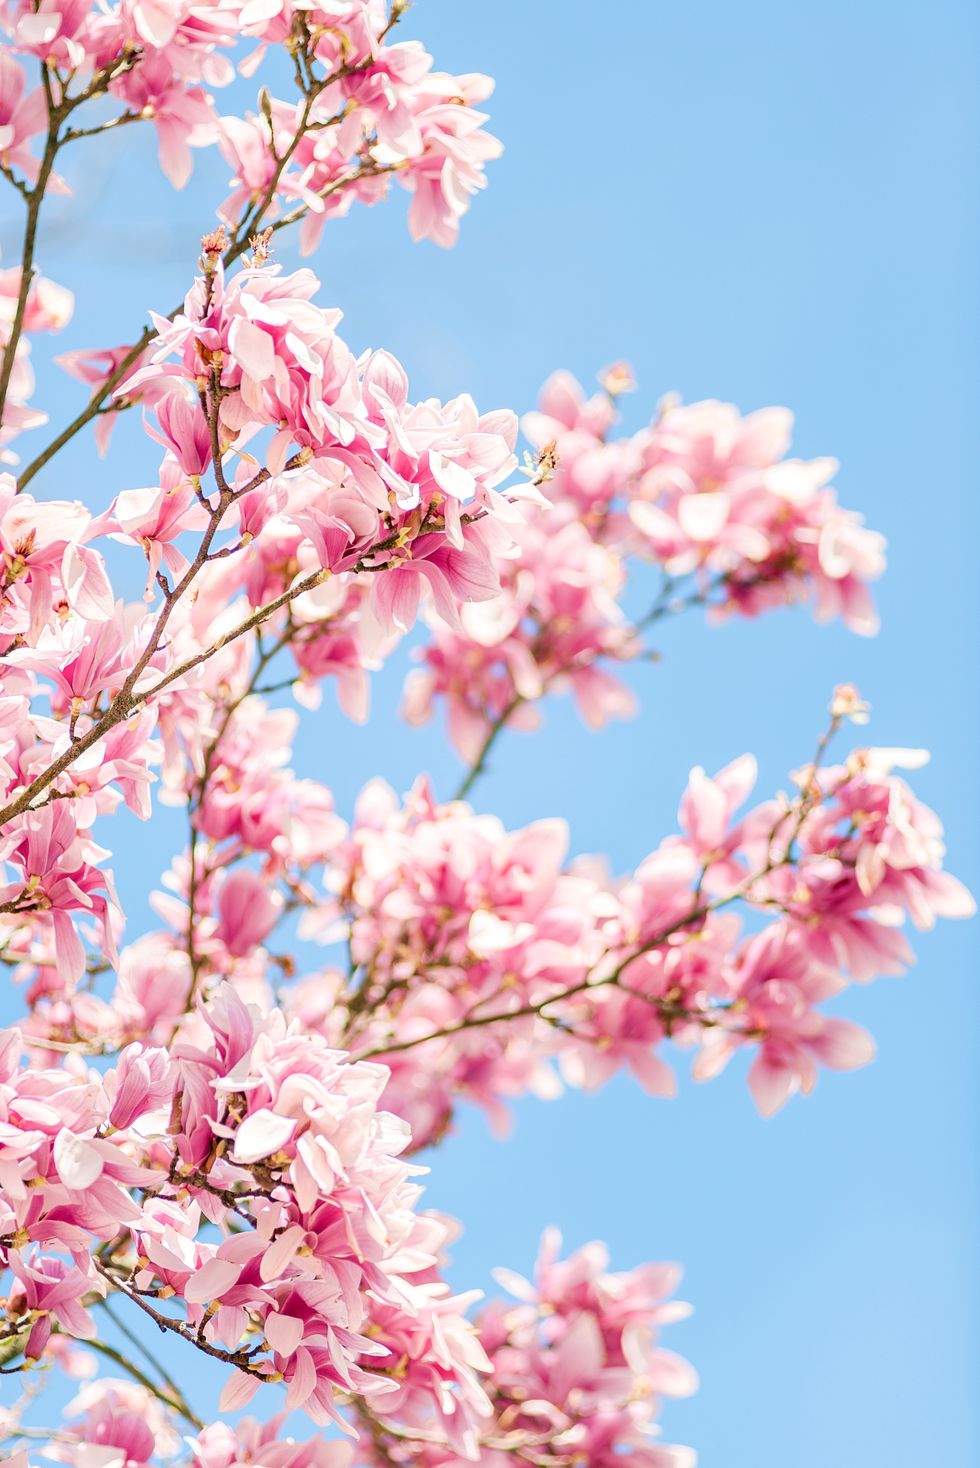 magnolia tree against a clear blue sky